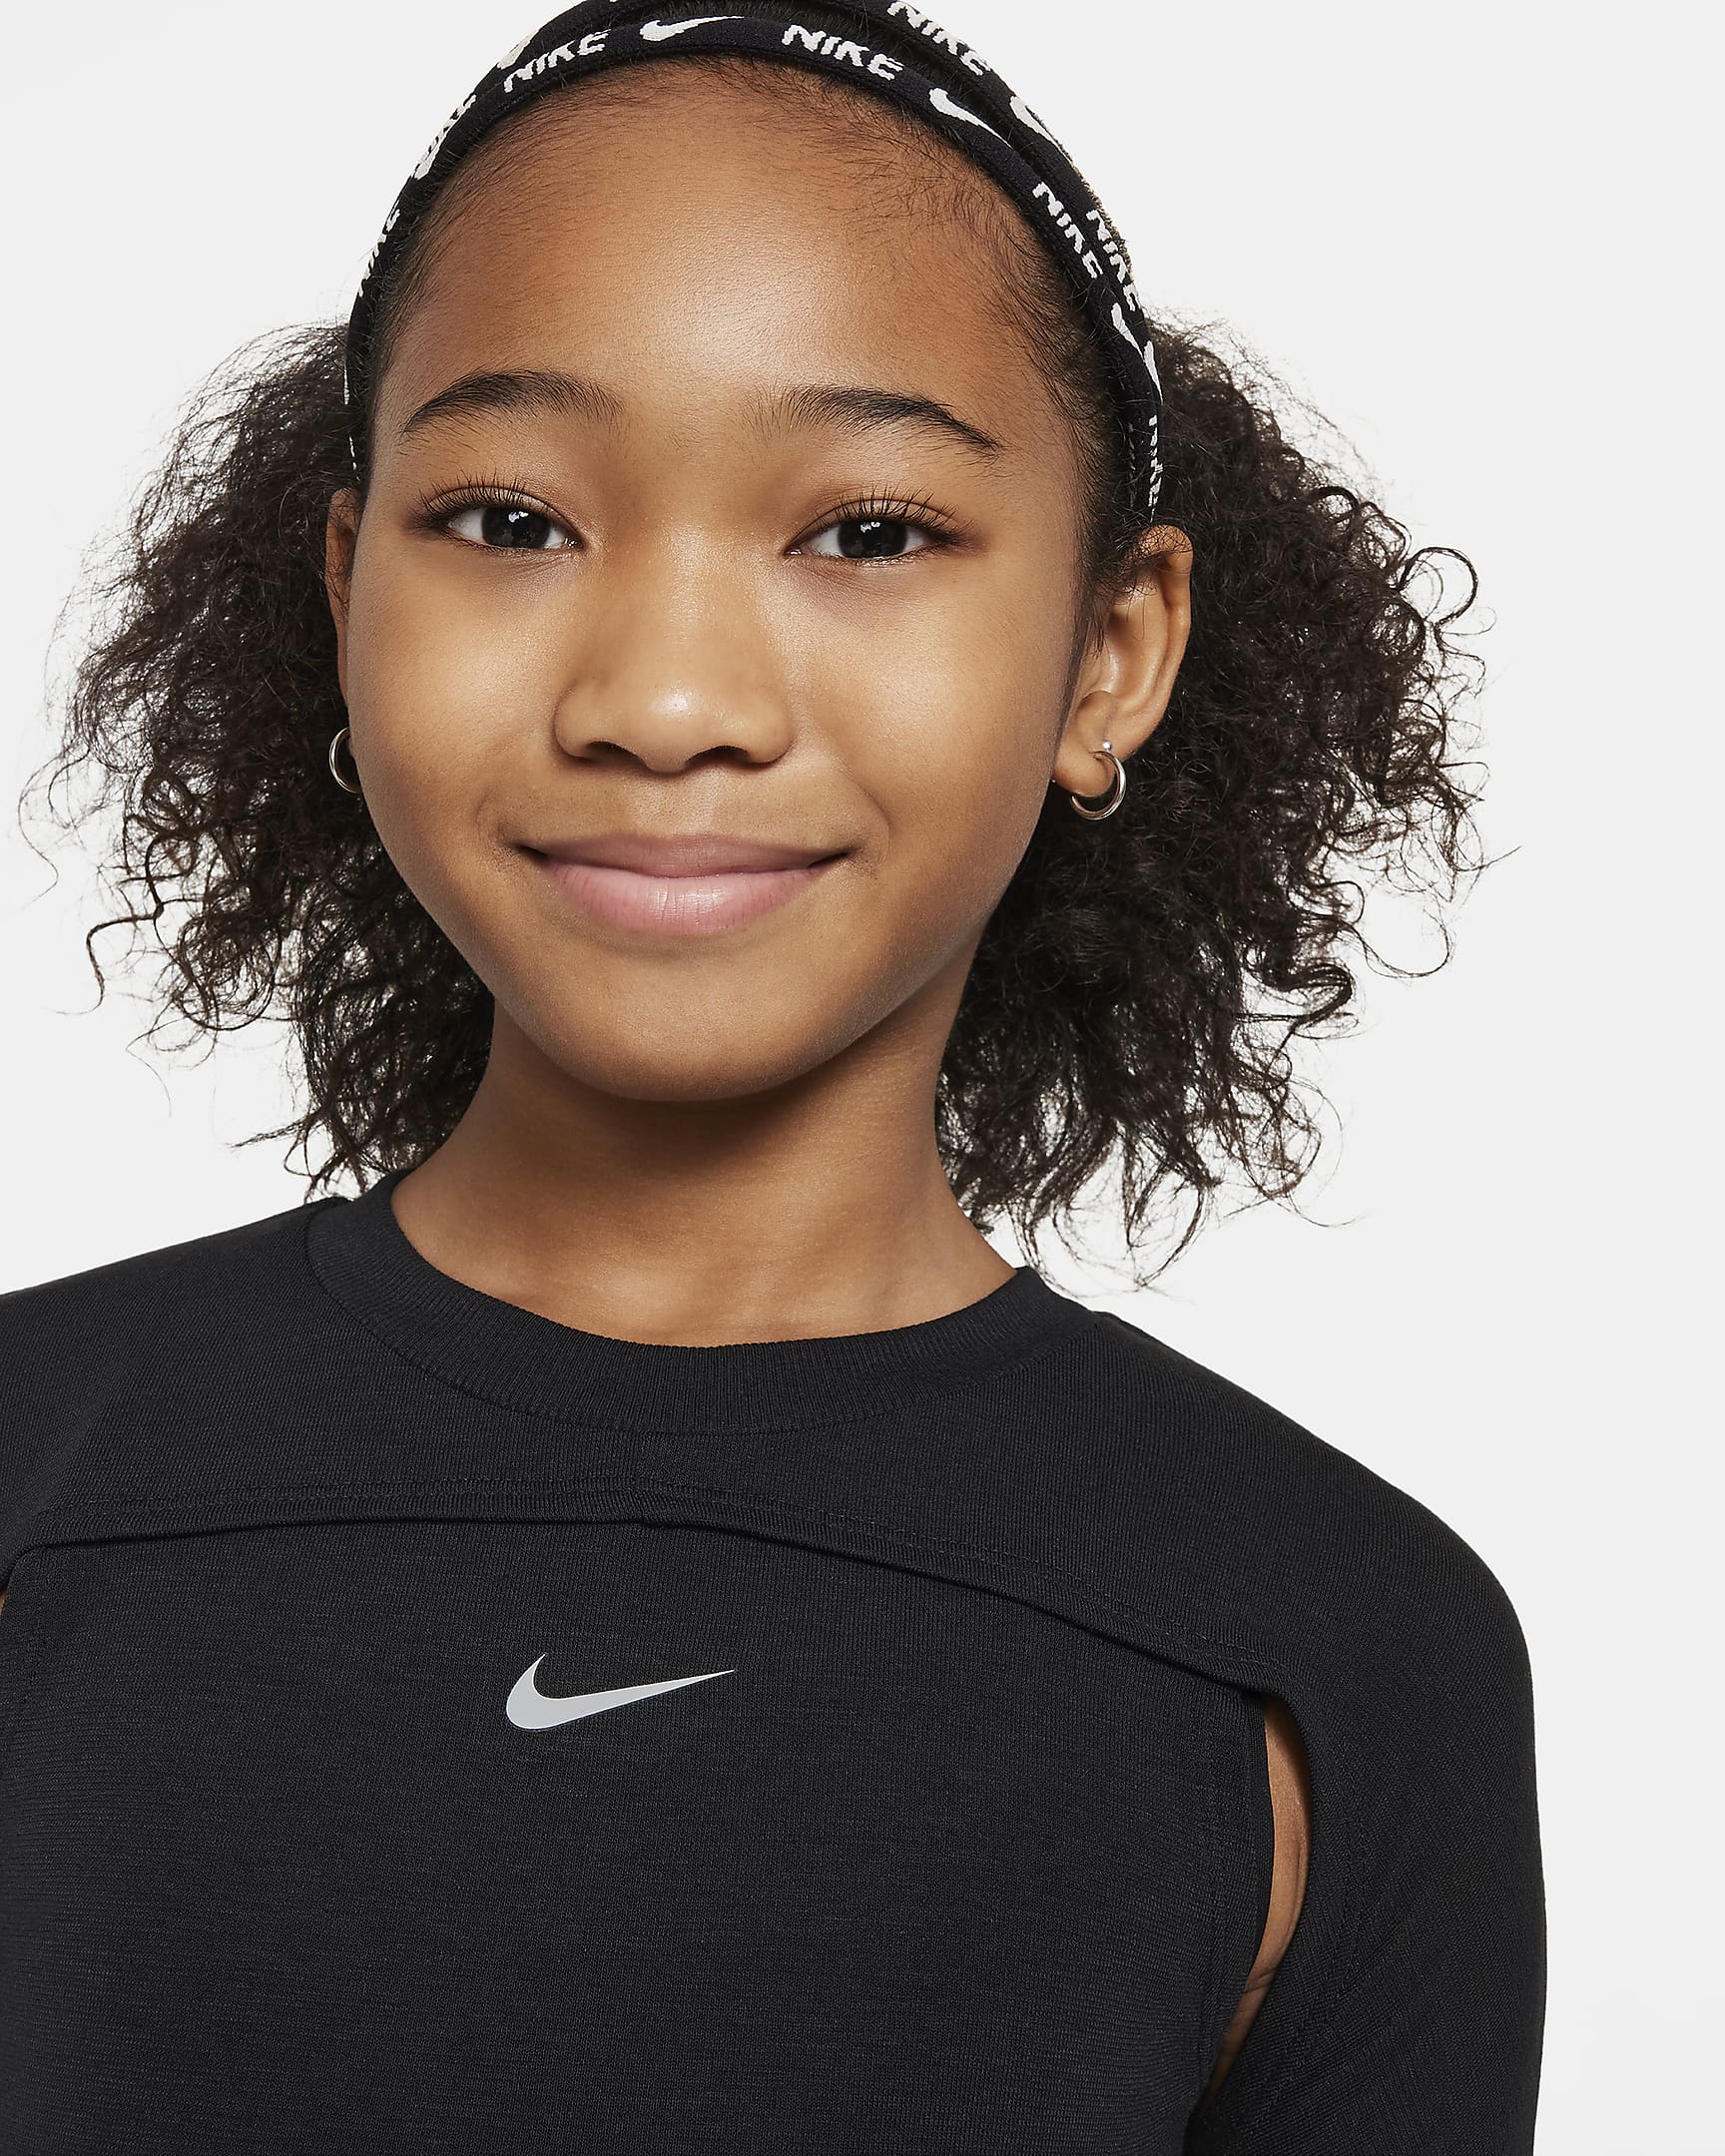 Nike Girls' Dri-FIT Long-Sleeve Top. Nike ID